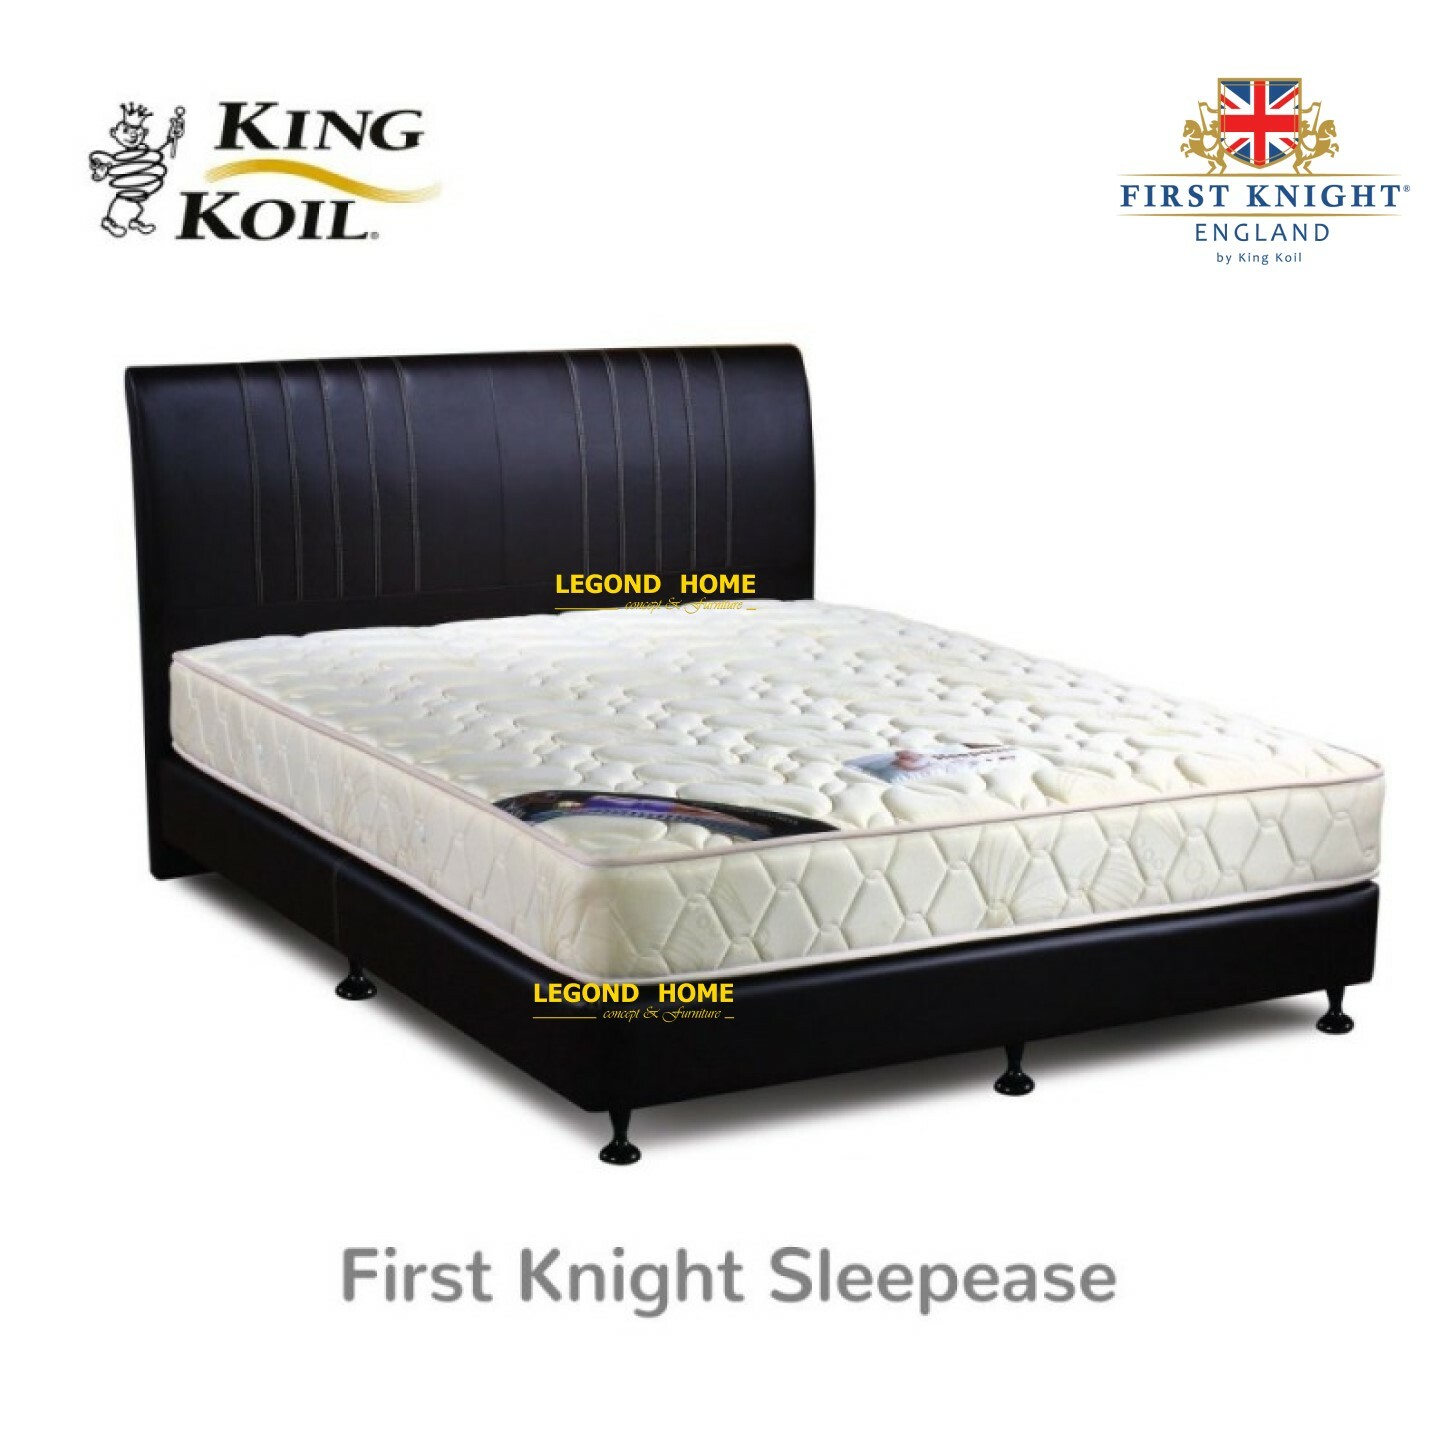 First-Knight-Sleepease-edit.jpg